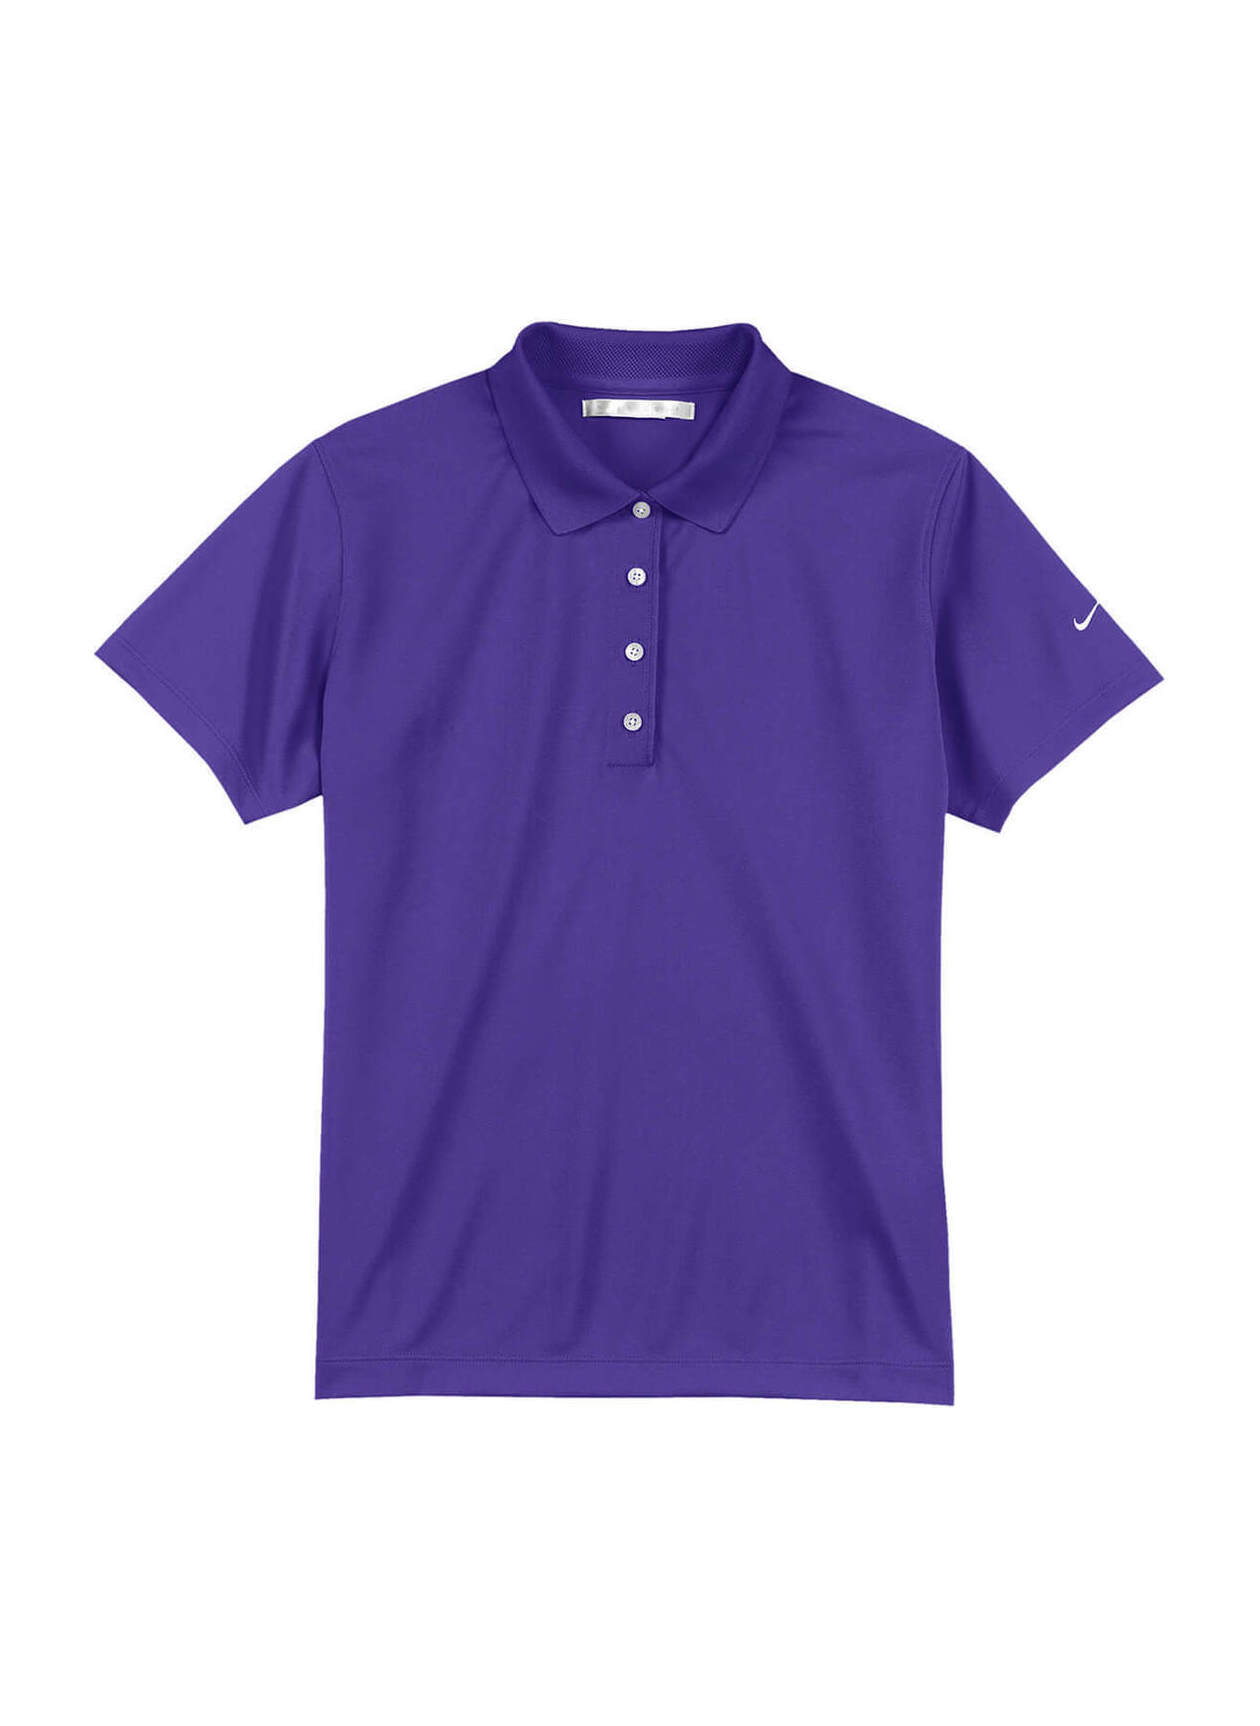 Nike Women's Varsity Purple Tech Basic Dri-FIT Polo